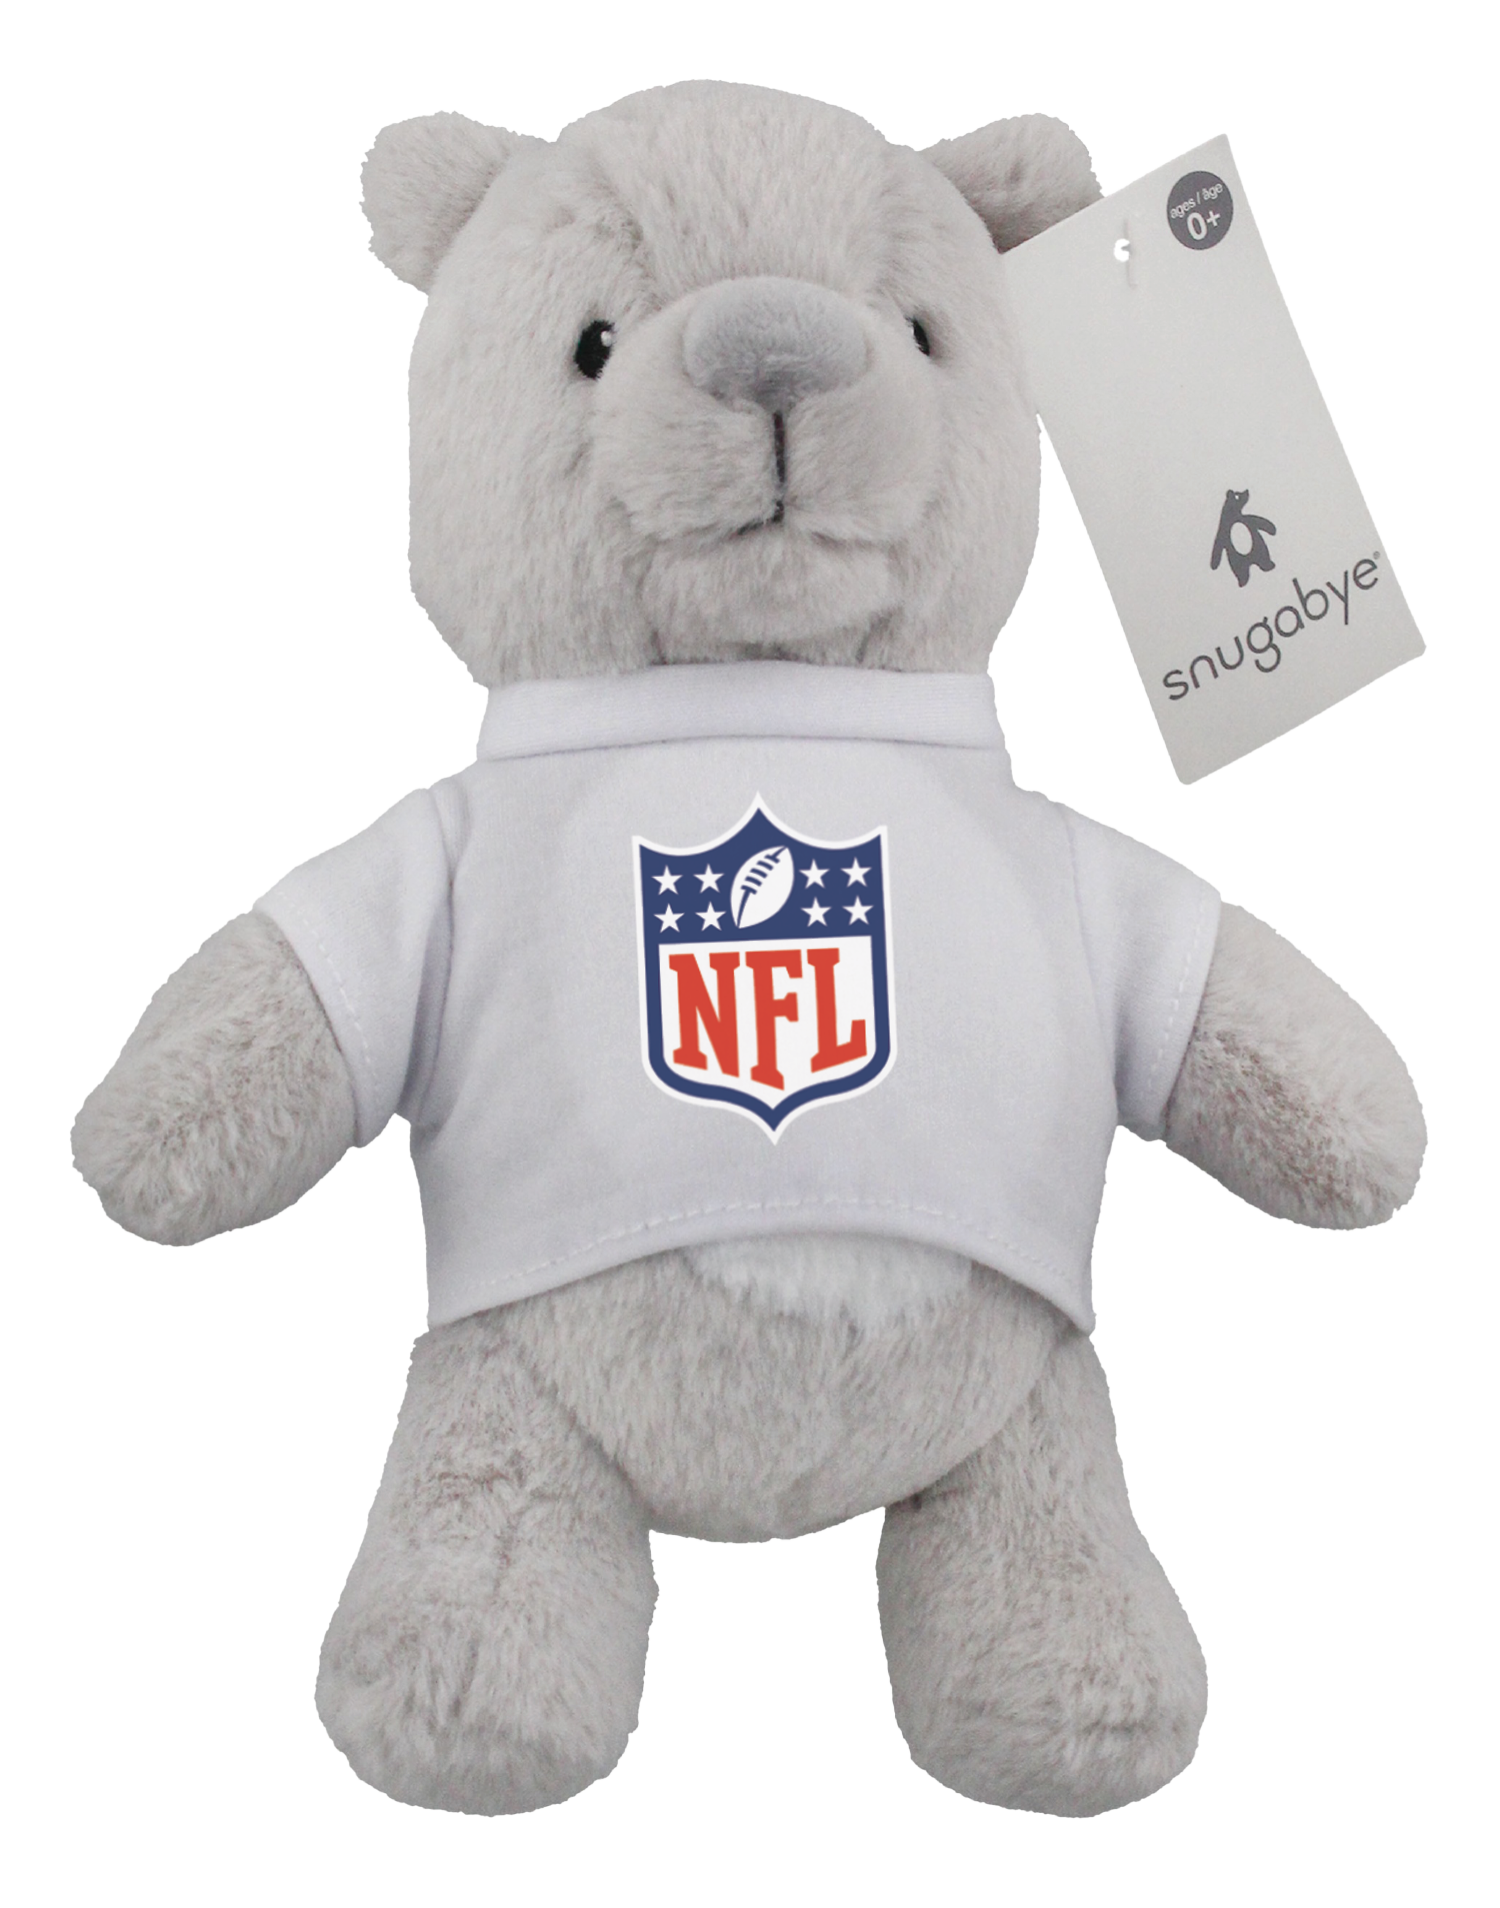 NFL Plush Teddy Bear